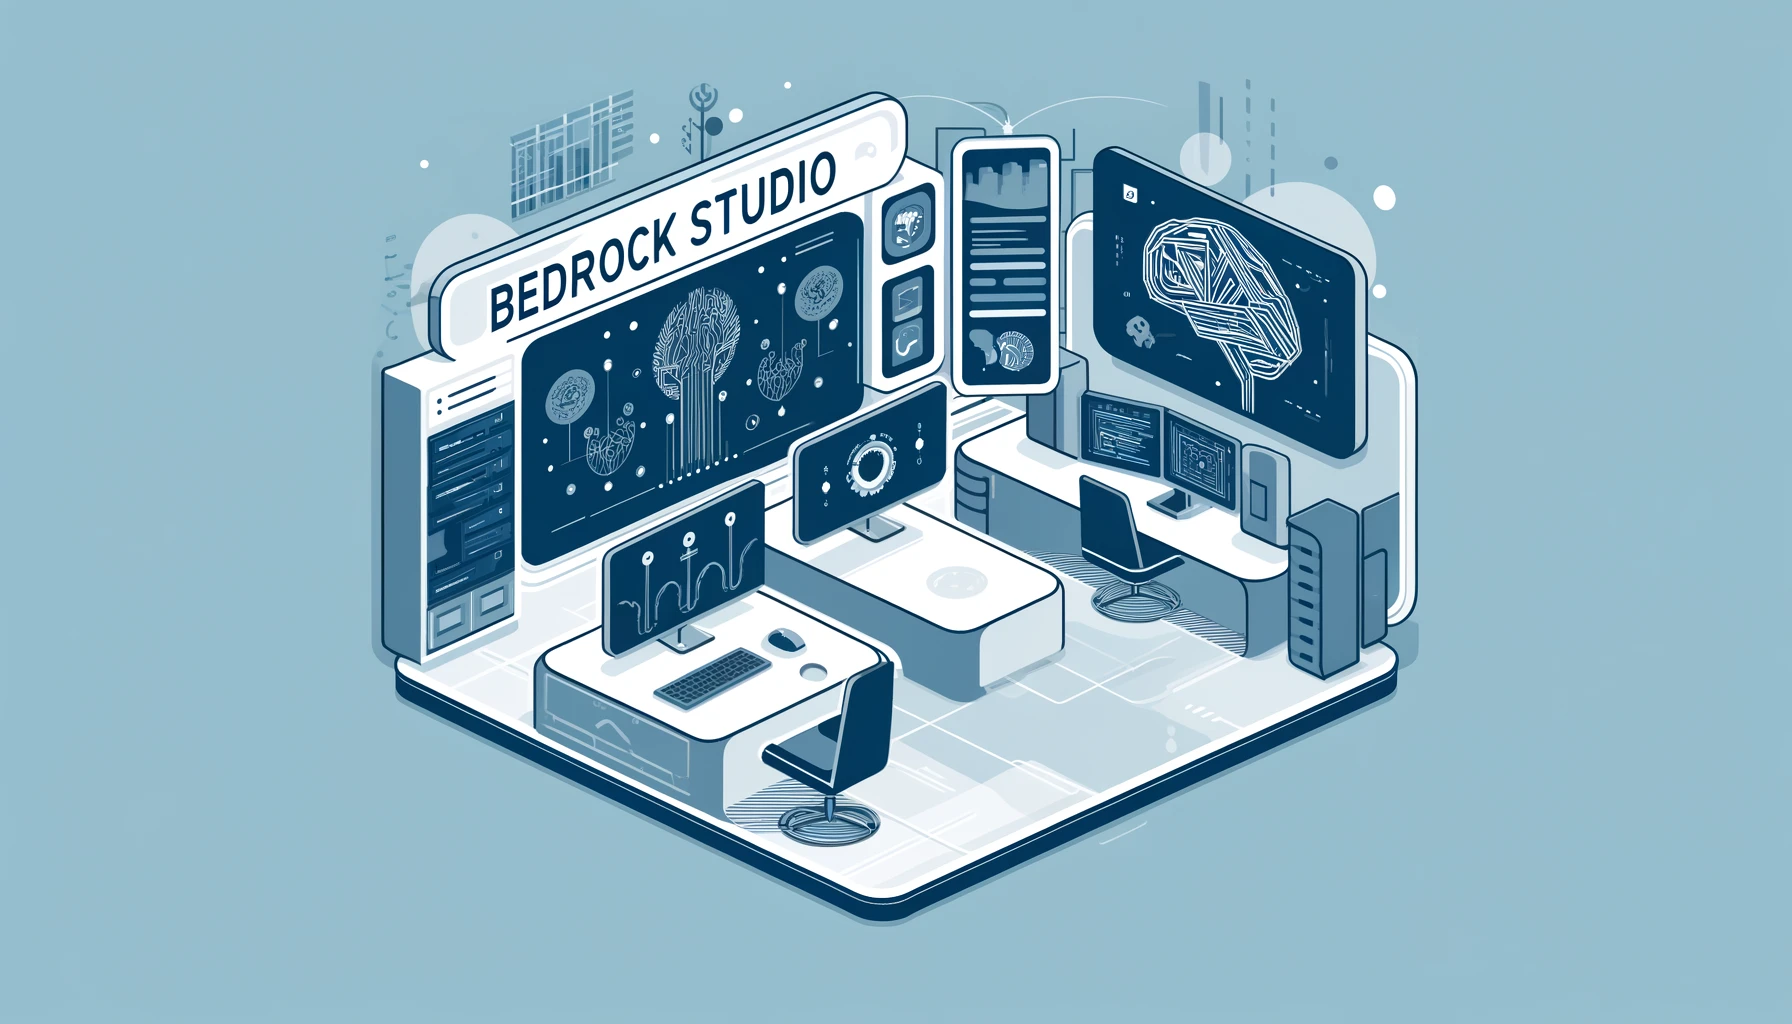 Bedrock Studio is Amazon's initiative to streamline the development of generative AI applications.